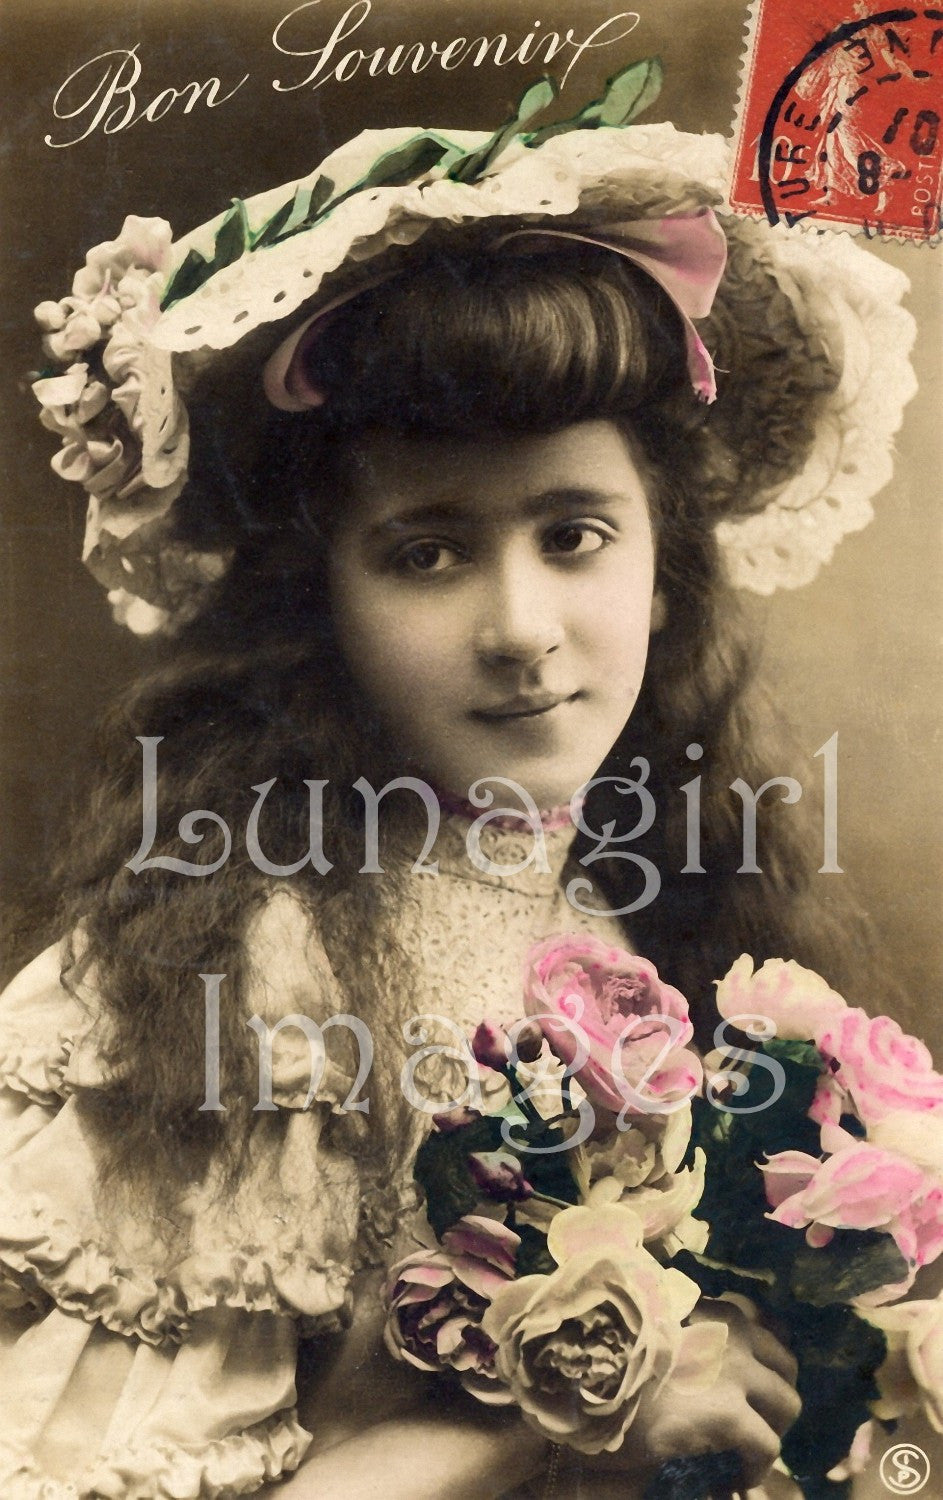 Victorian Little Girls Photos: 500 Images - Lunagirl